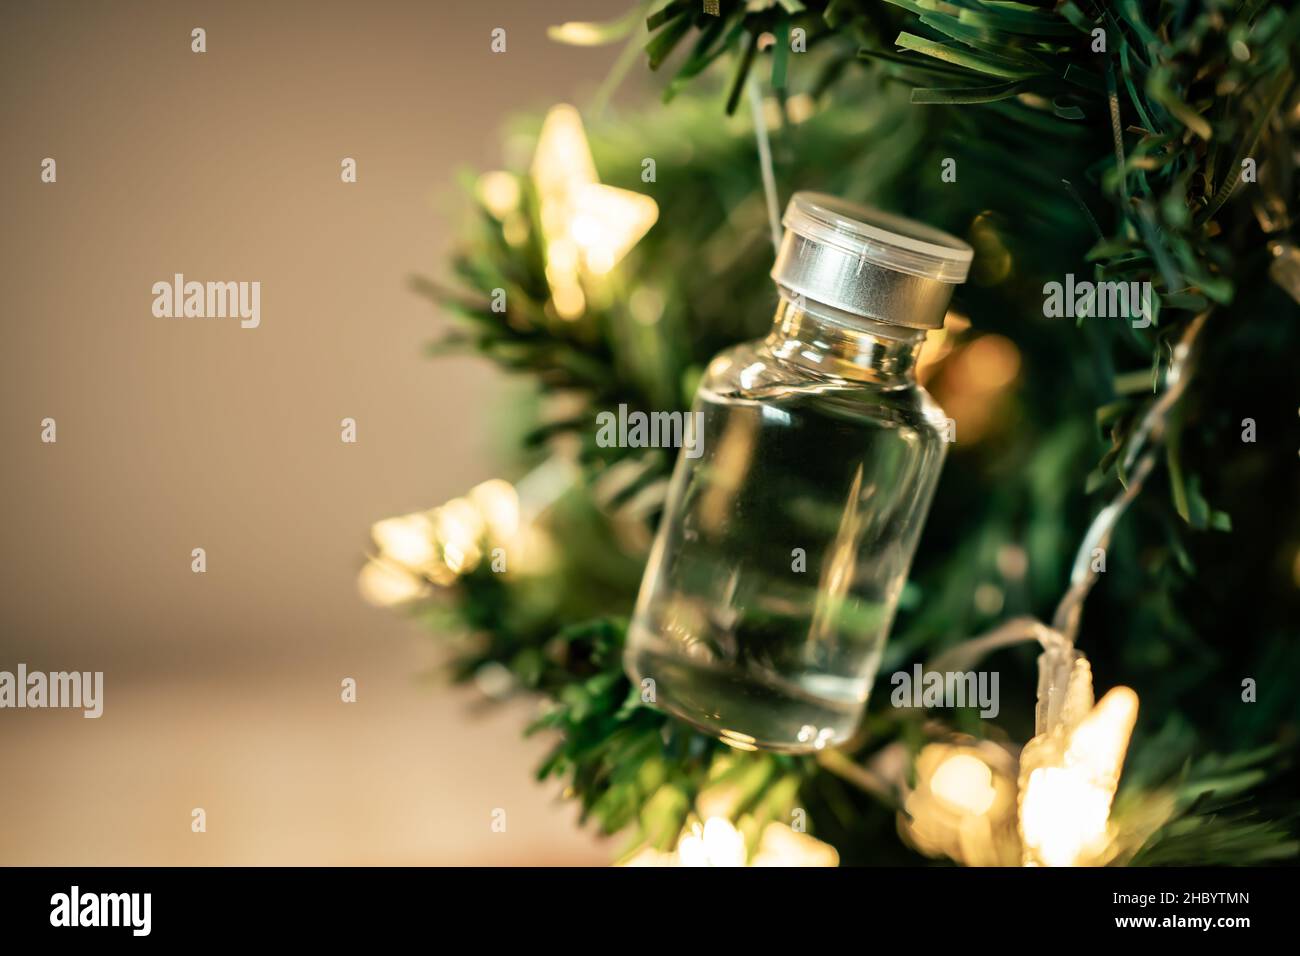 Vaccine vial on a Christmas tree Stock Photo